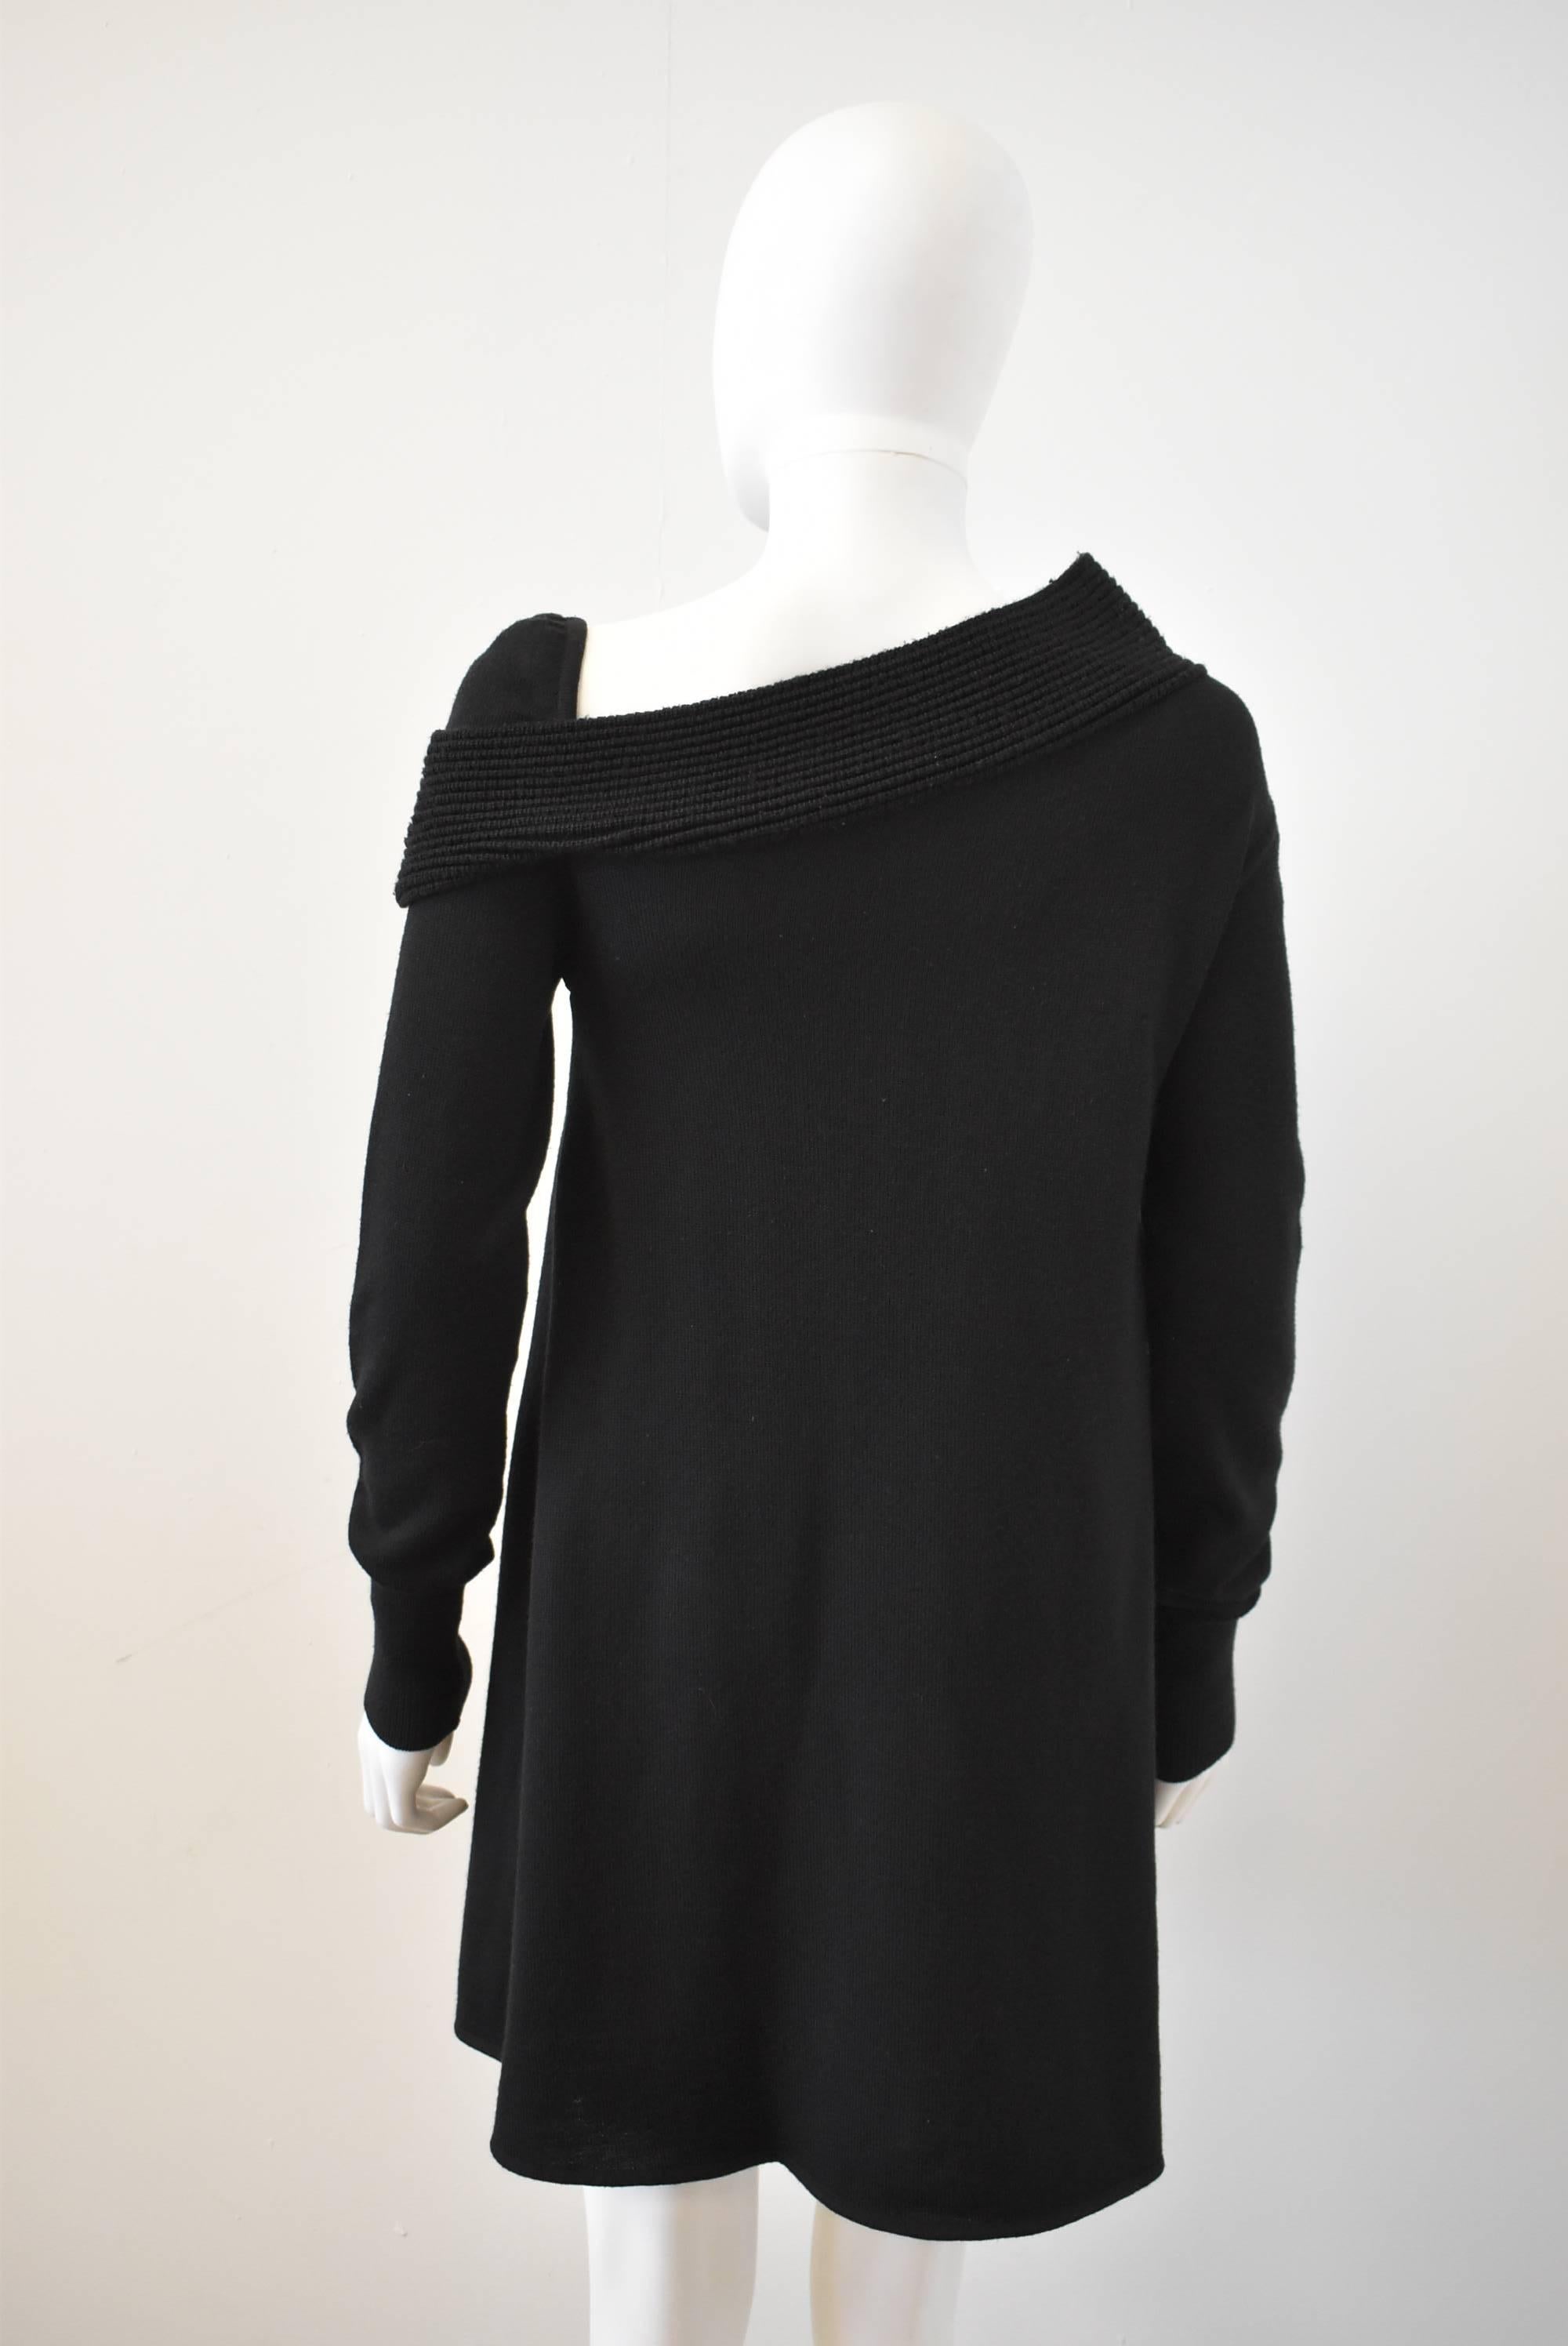 Balenciaga Black Knit Dress with Ribbed Asymetric Neckline 2